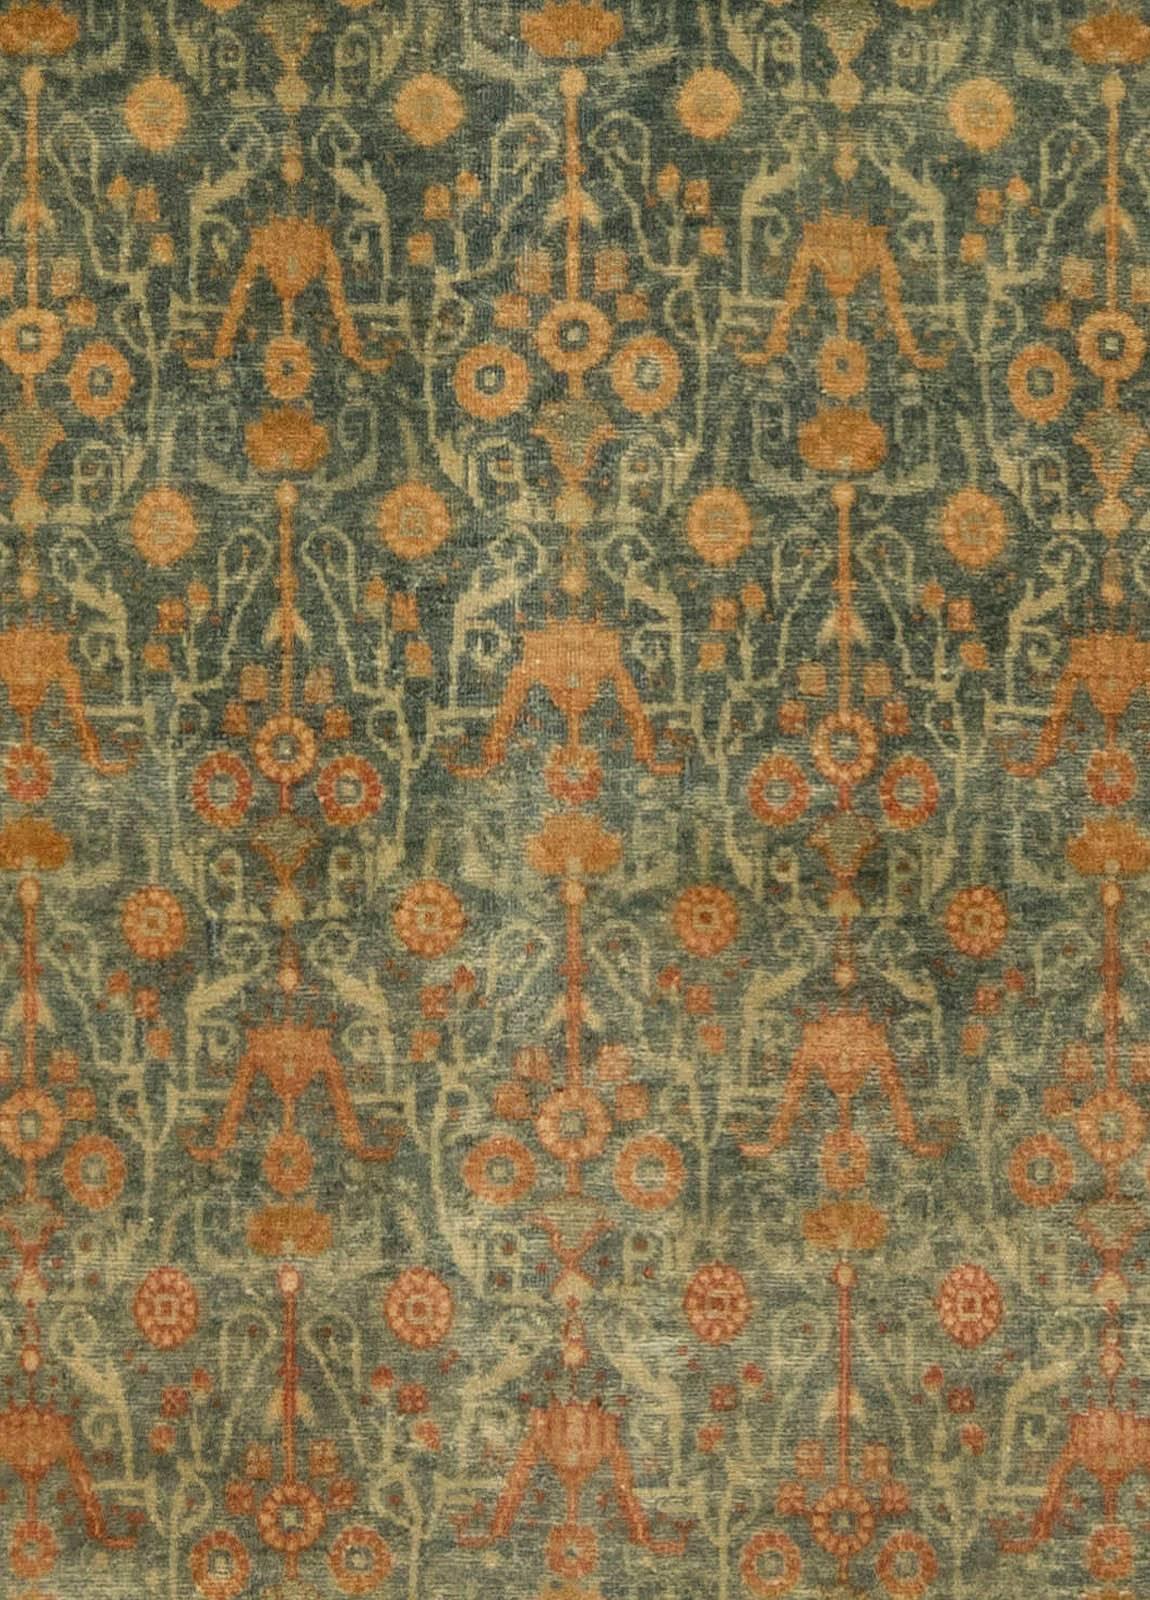 Antique Persian Tabriz rug
Size: 6'10